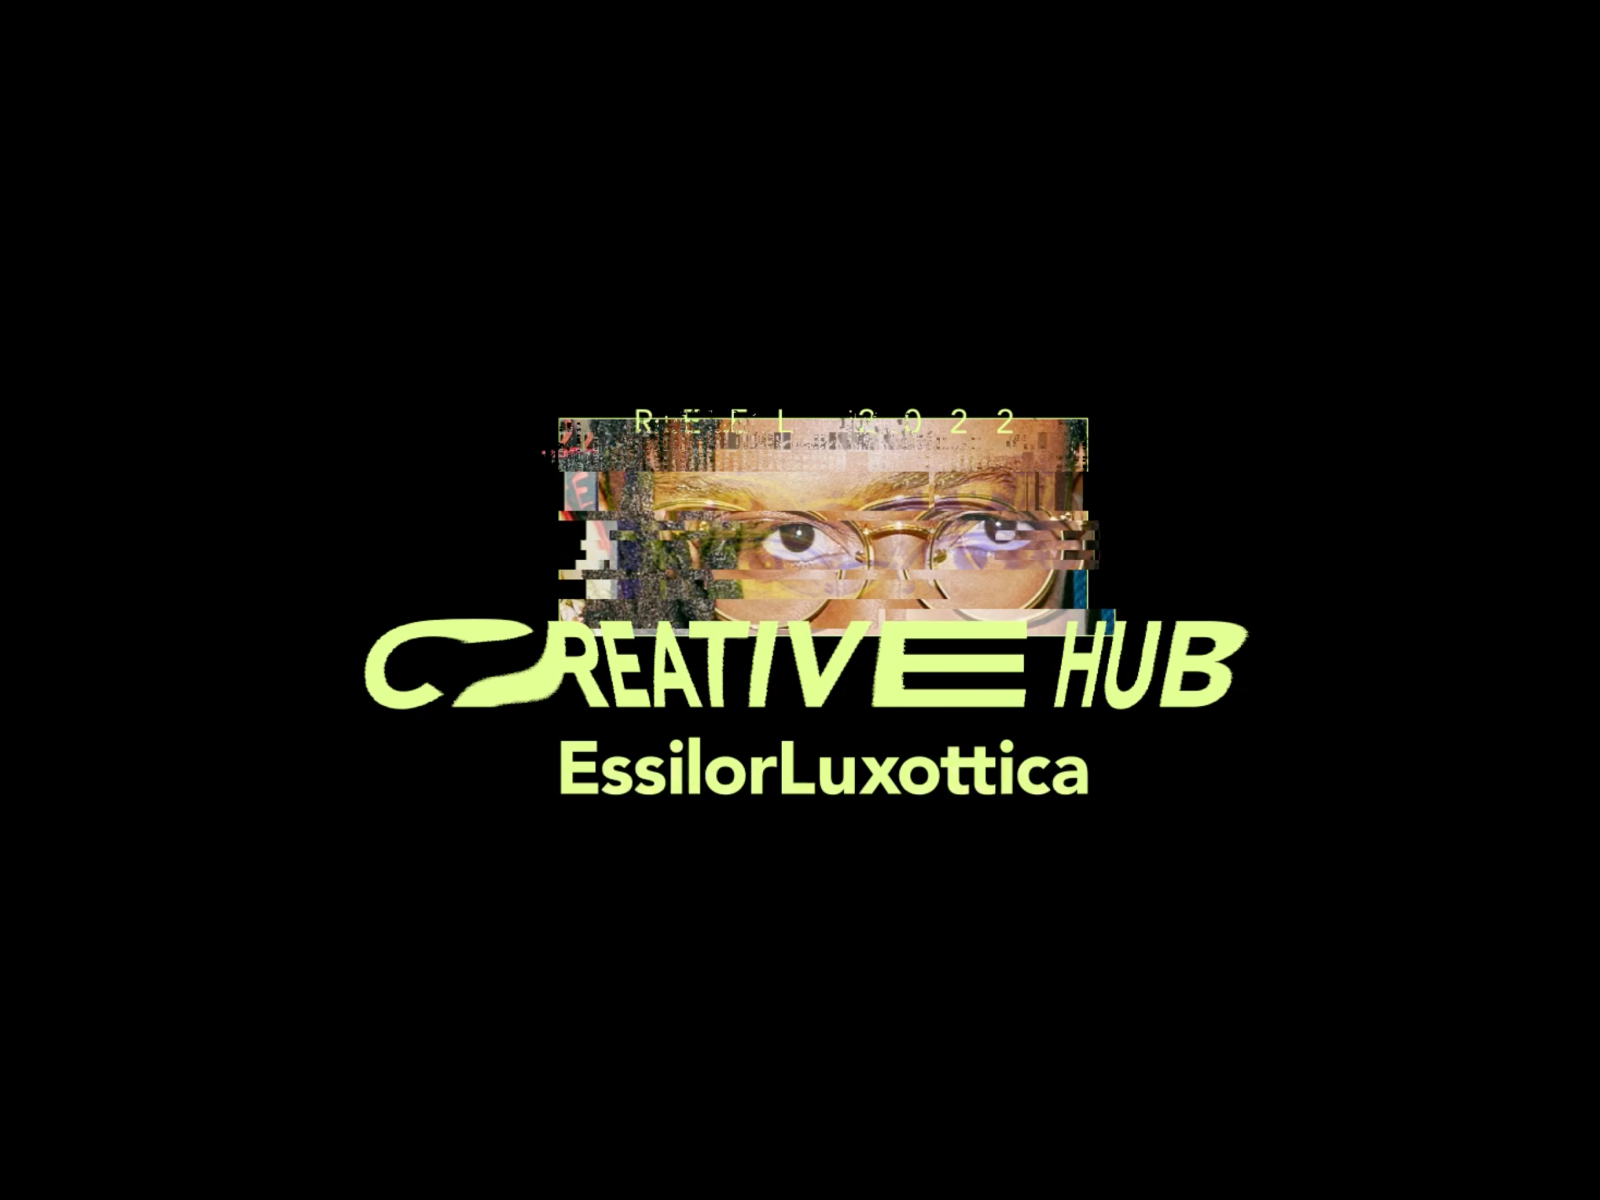 Essilor Luxottica Creative Hub